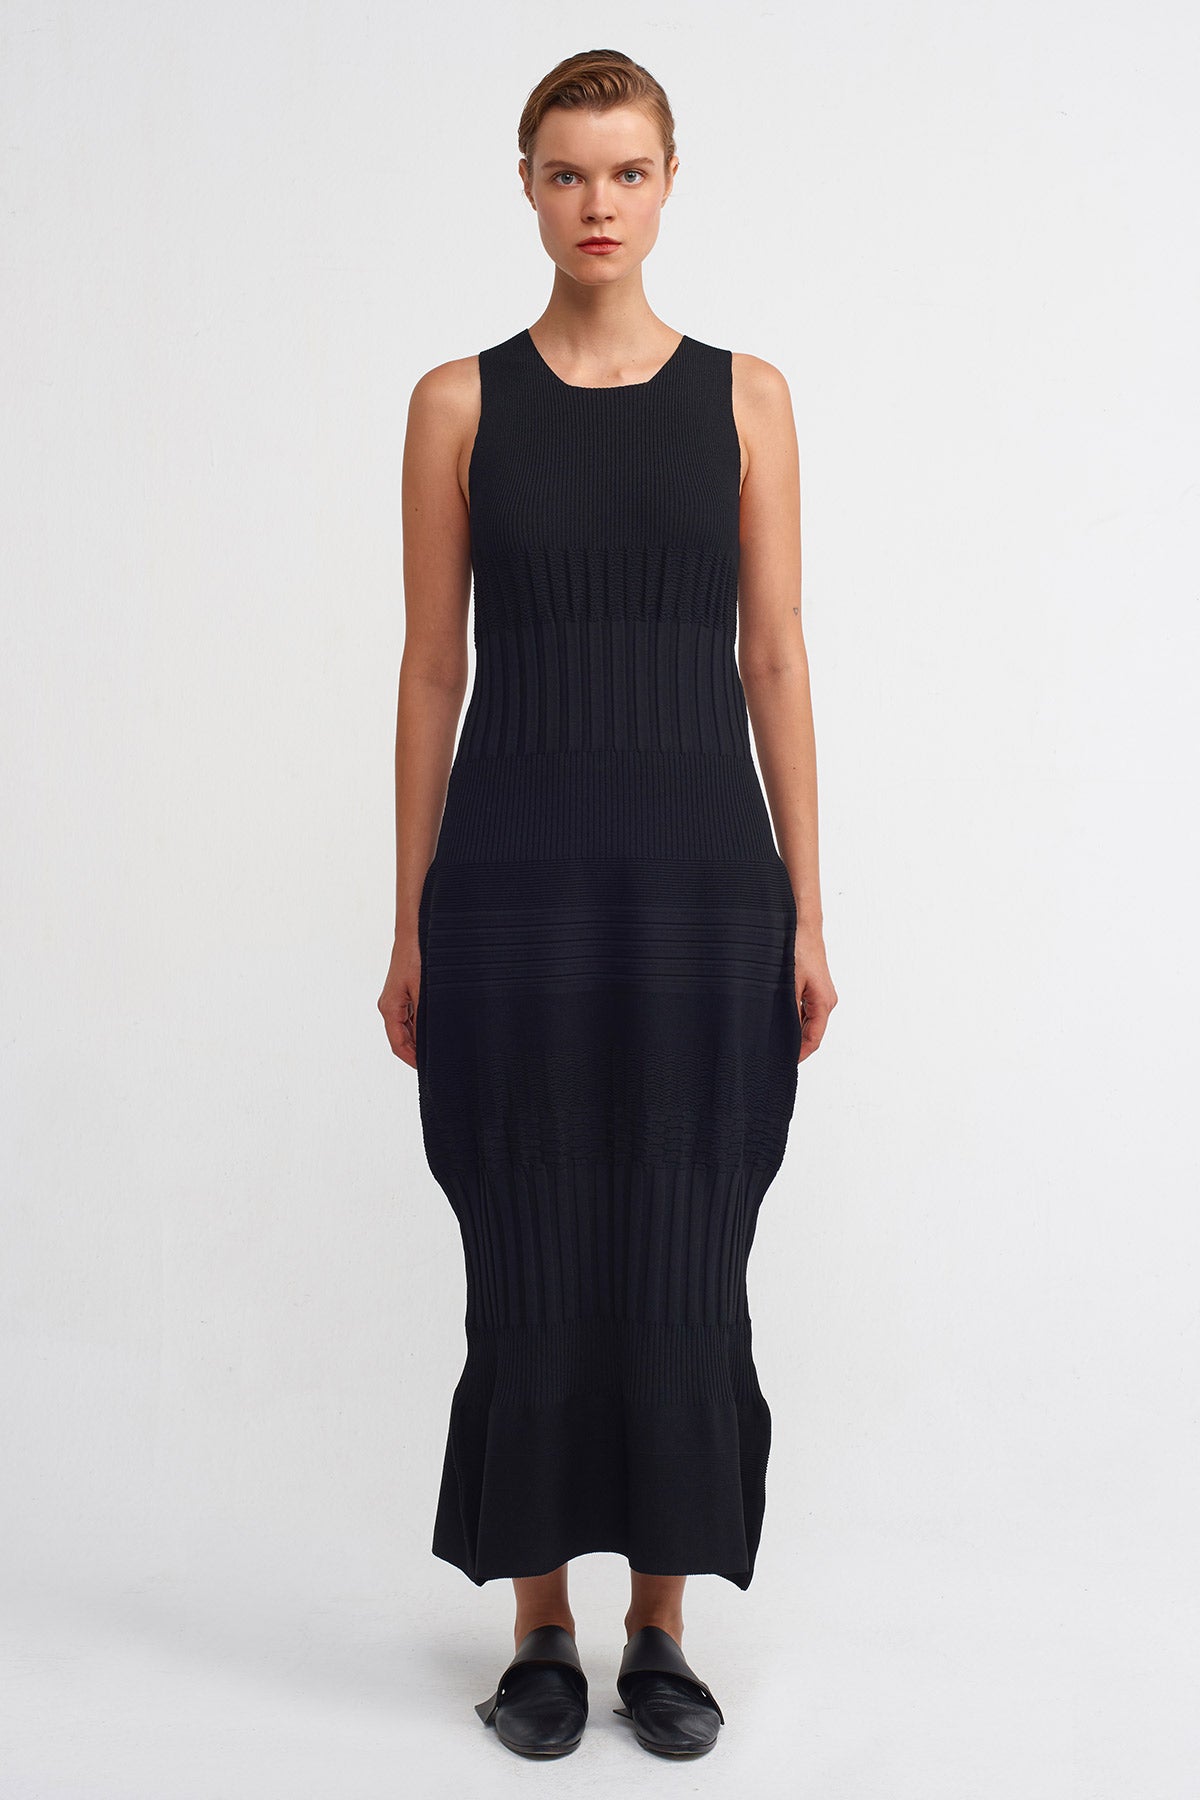 Black Striped Abstract Knit Dress-K234014087